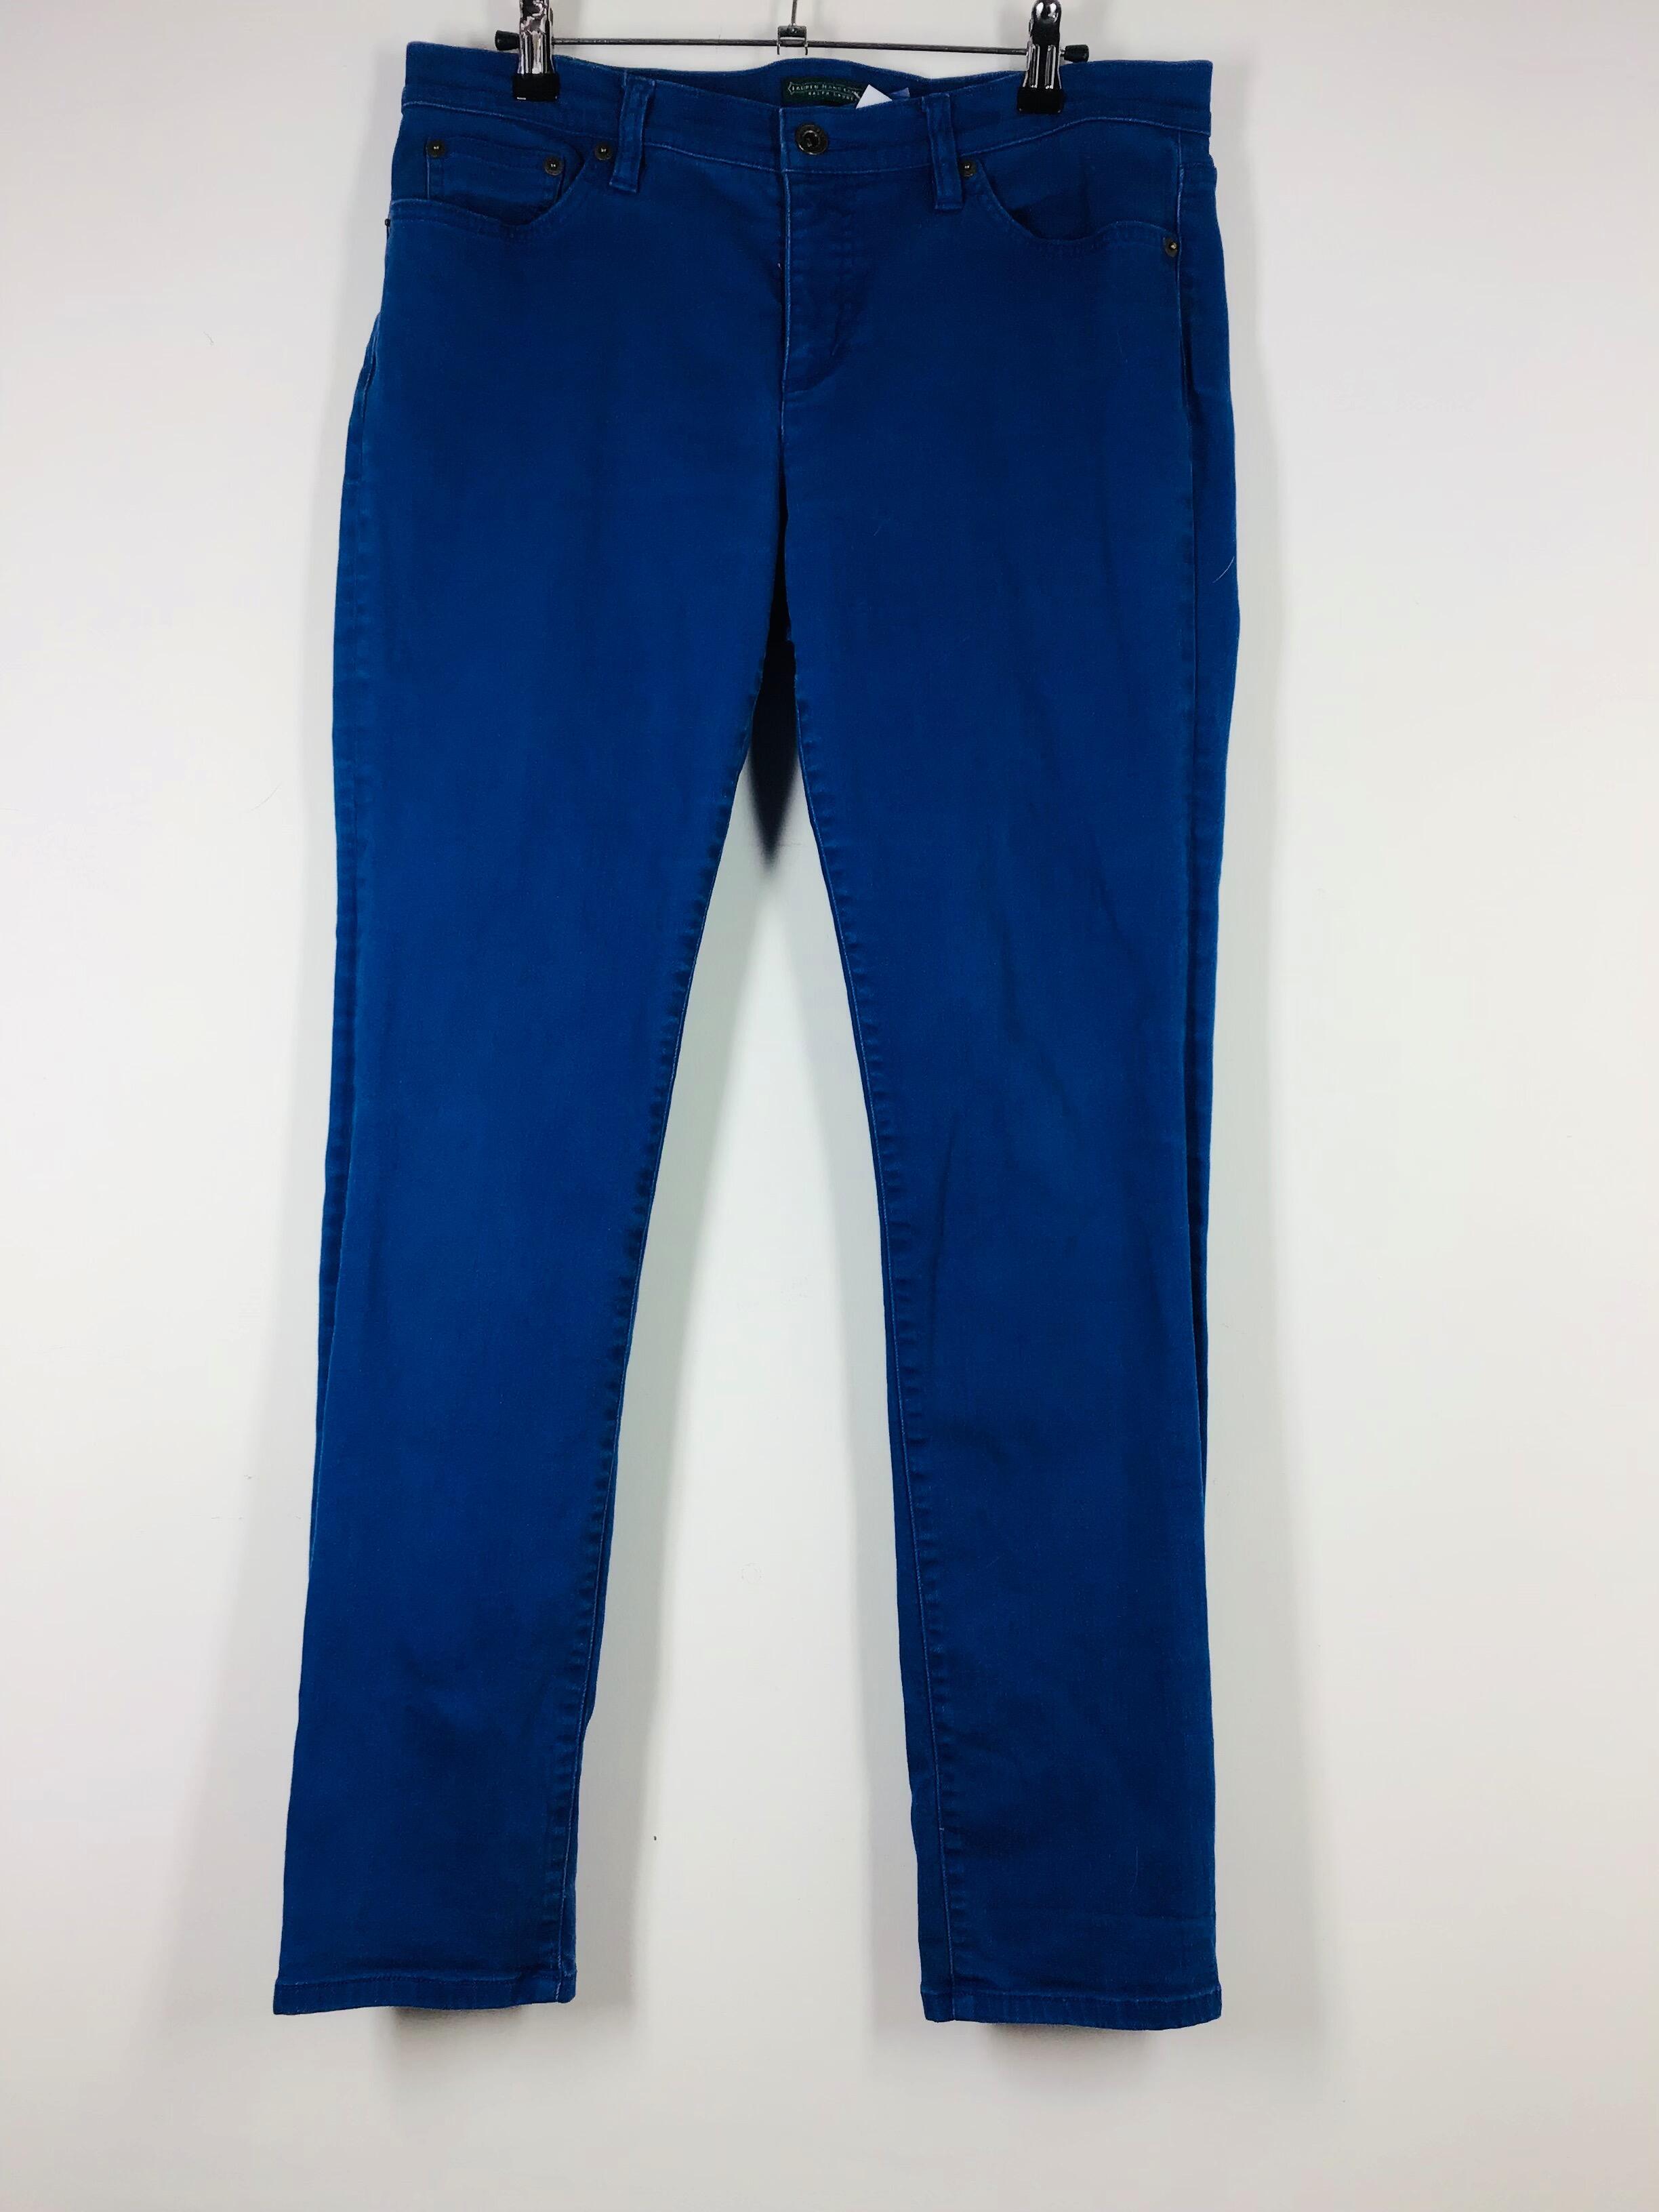 Ralph Lauren - Lauren Jeans Company Blue Jeans UK 12